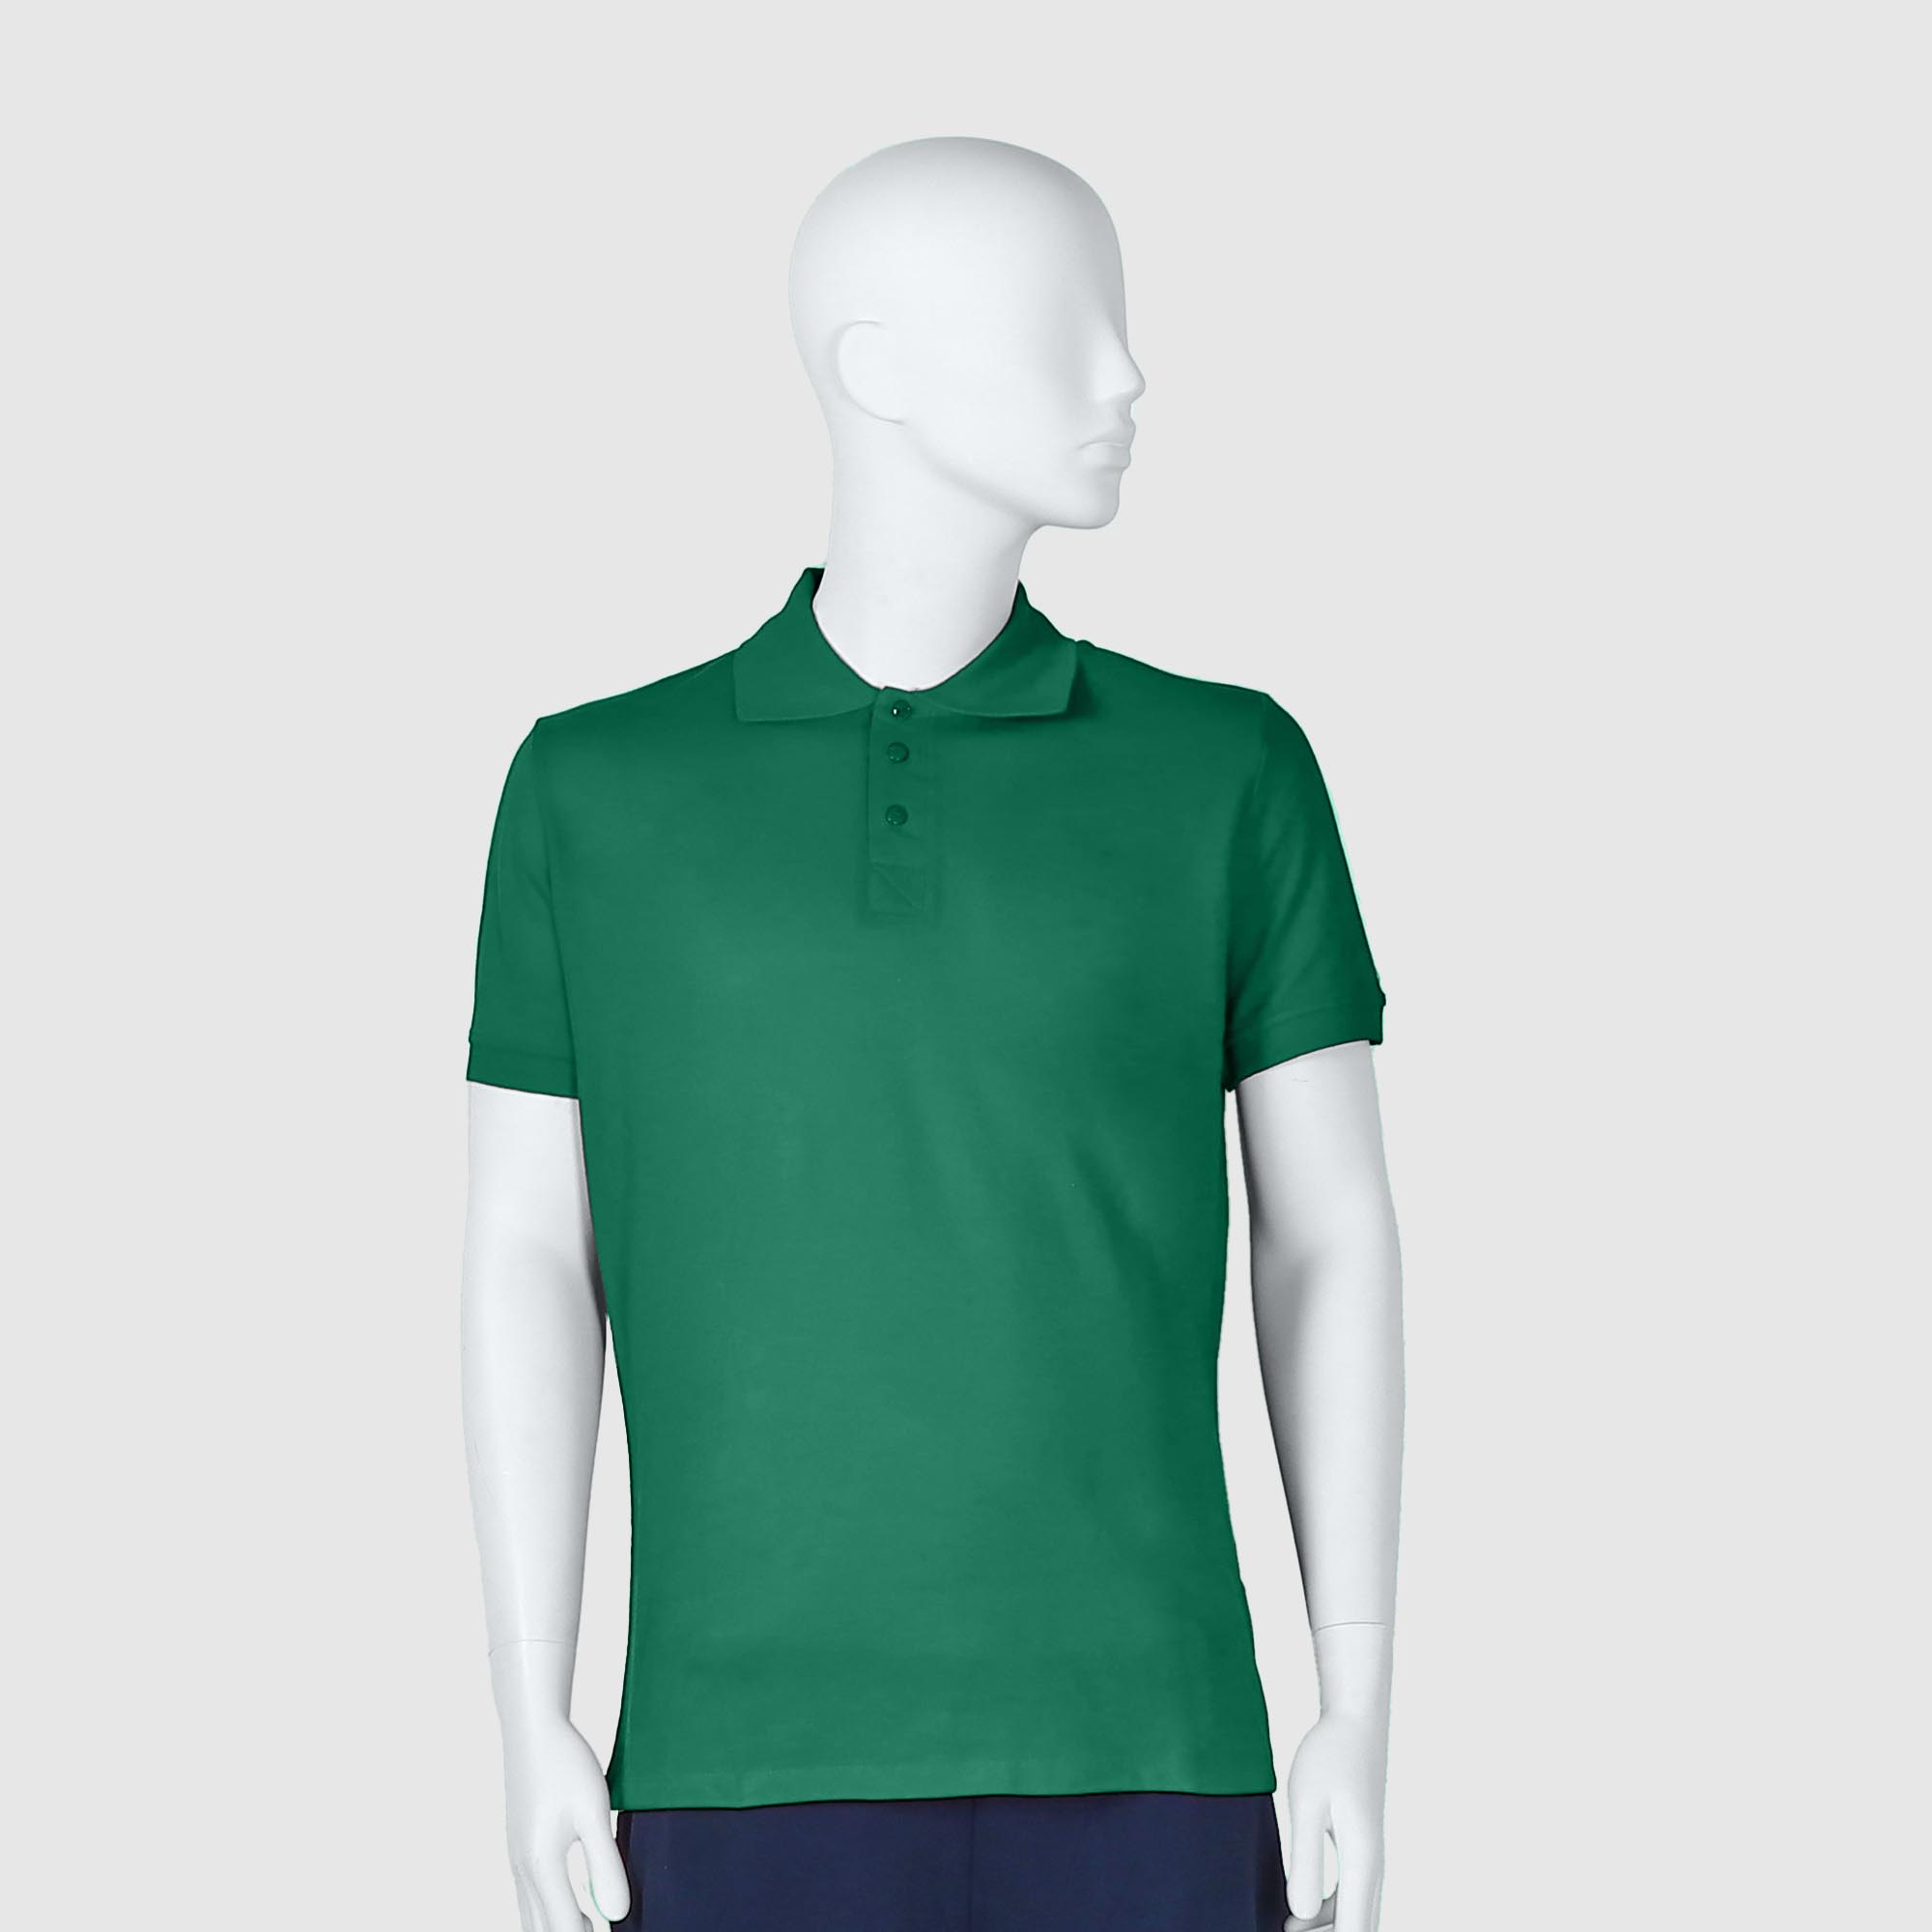 Мужская футболка-поло Diva Teks зелёная (DTD-09), цвет зелёный, размер 52-54